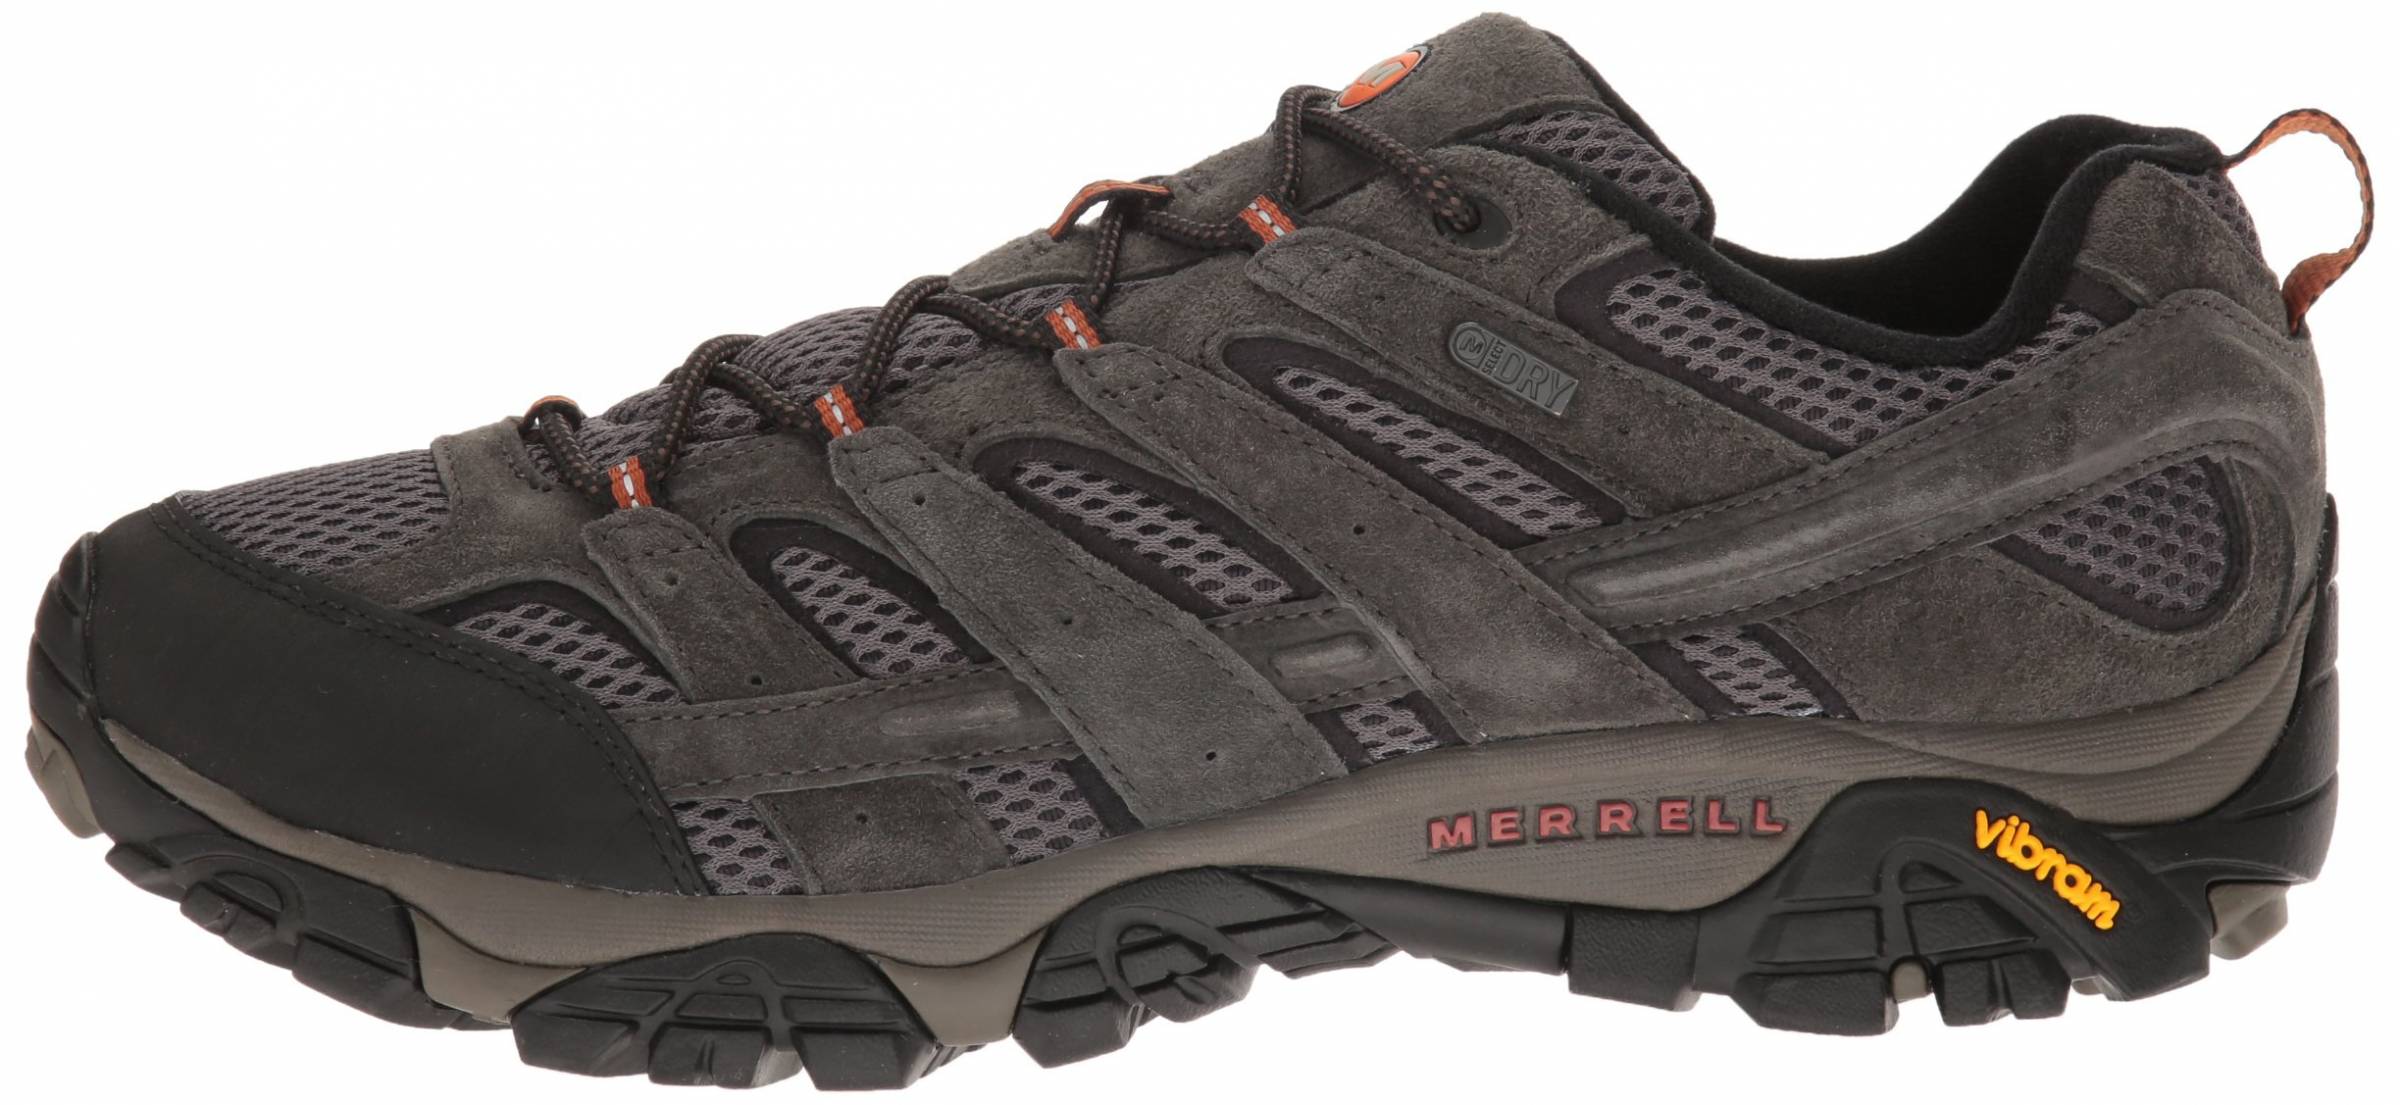 2E 12 Us Wide Hiking Shoes Beluga Merrell Moab 2 Goretex Mens 